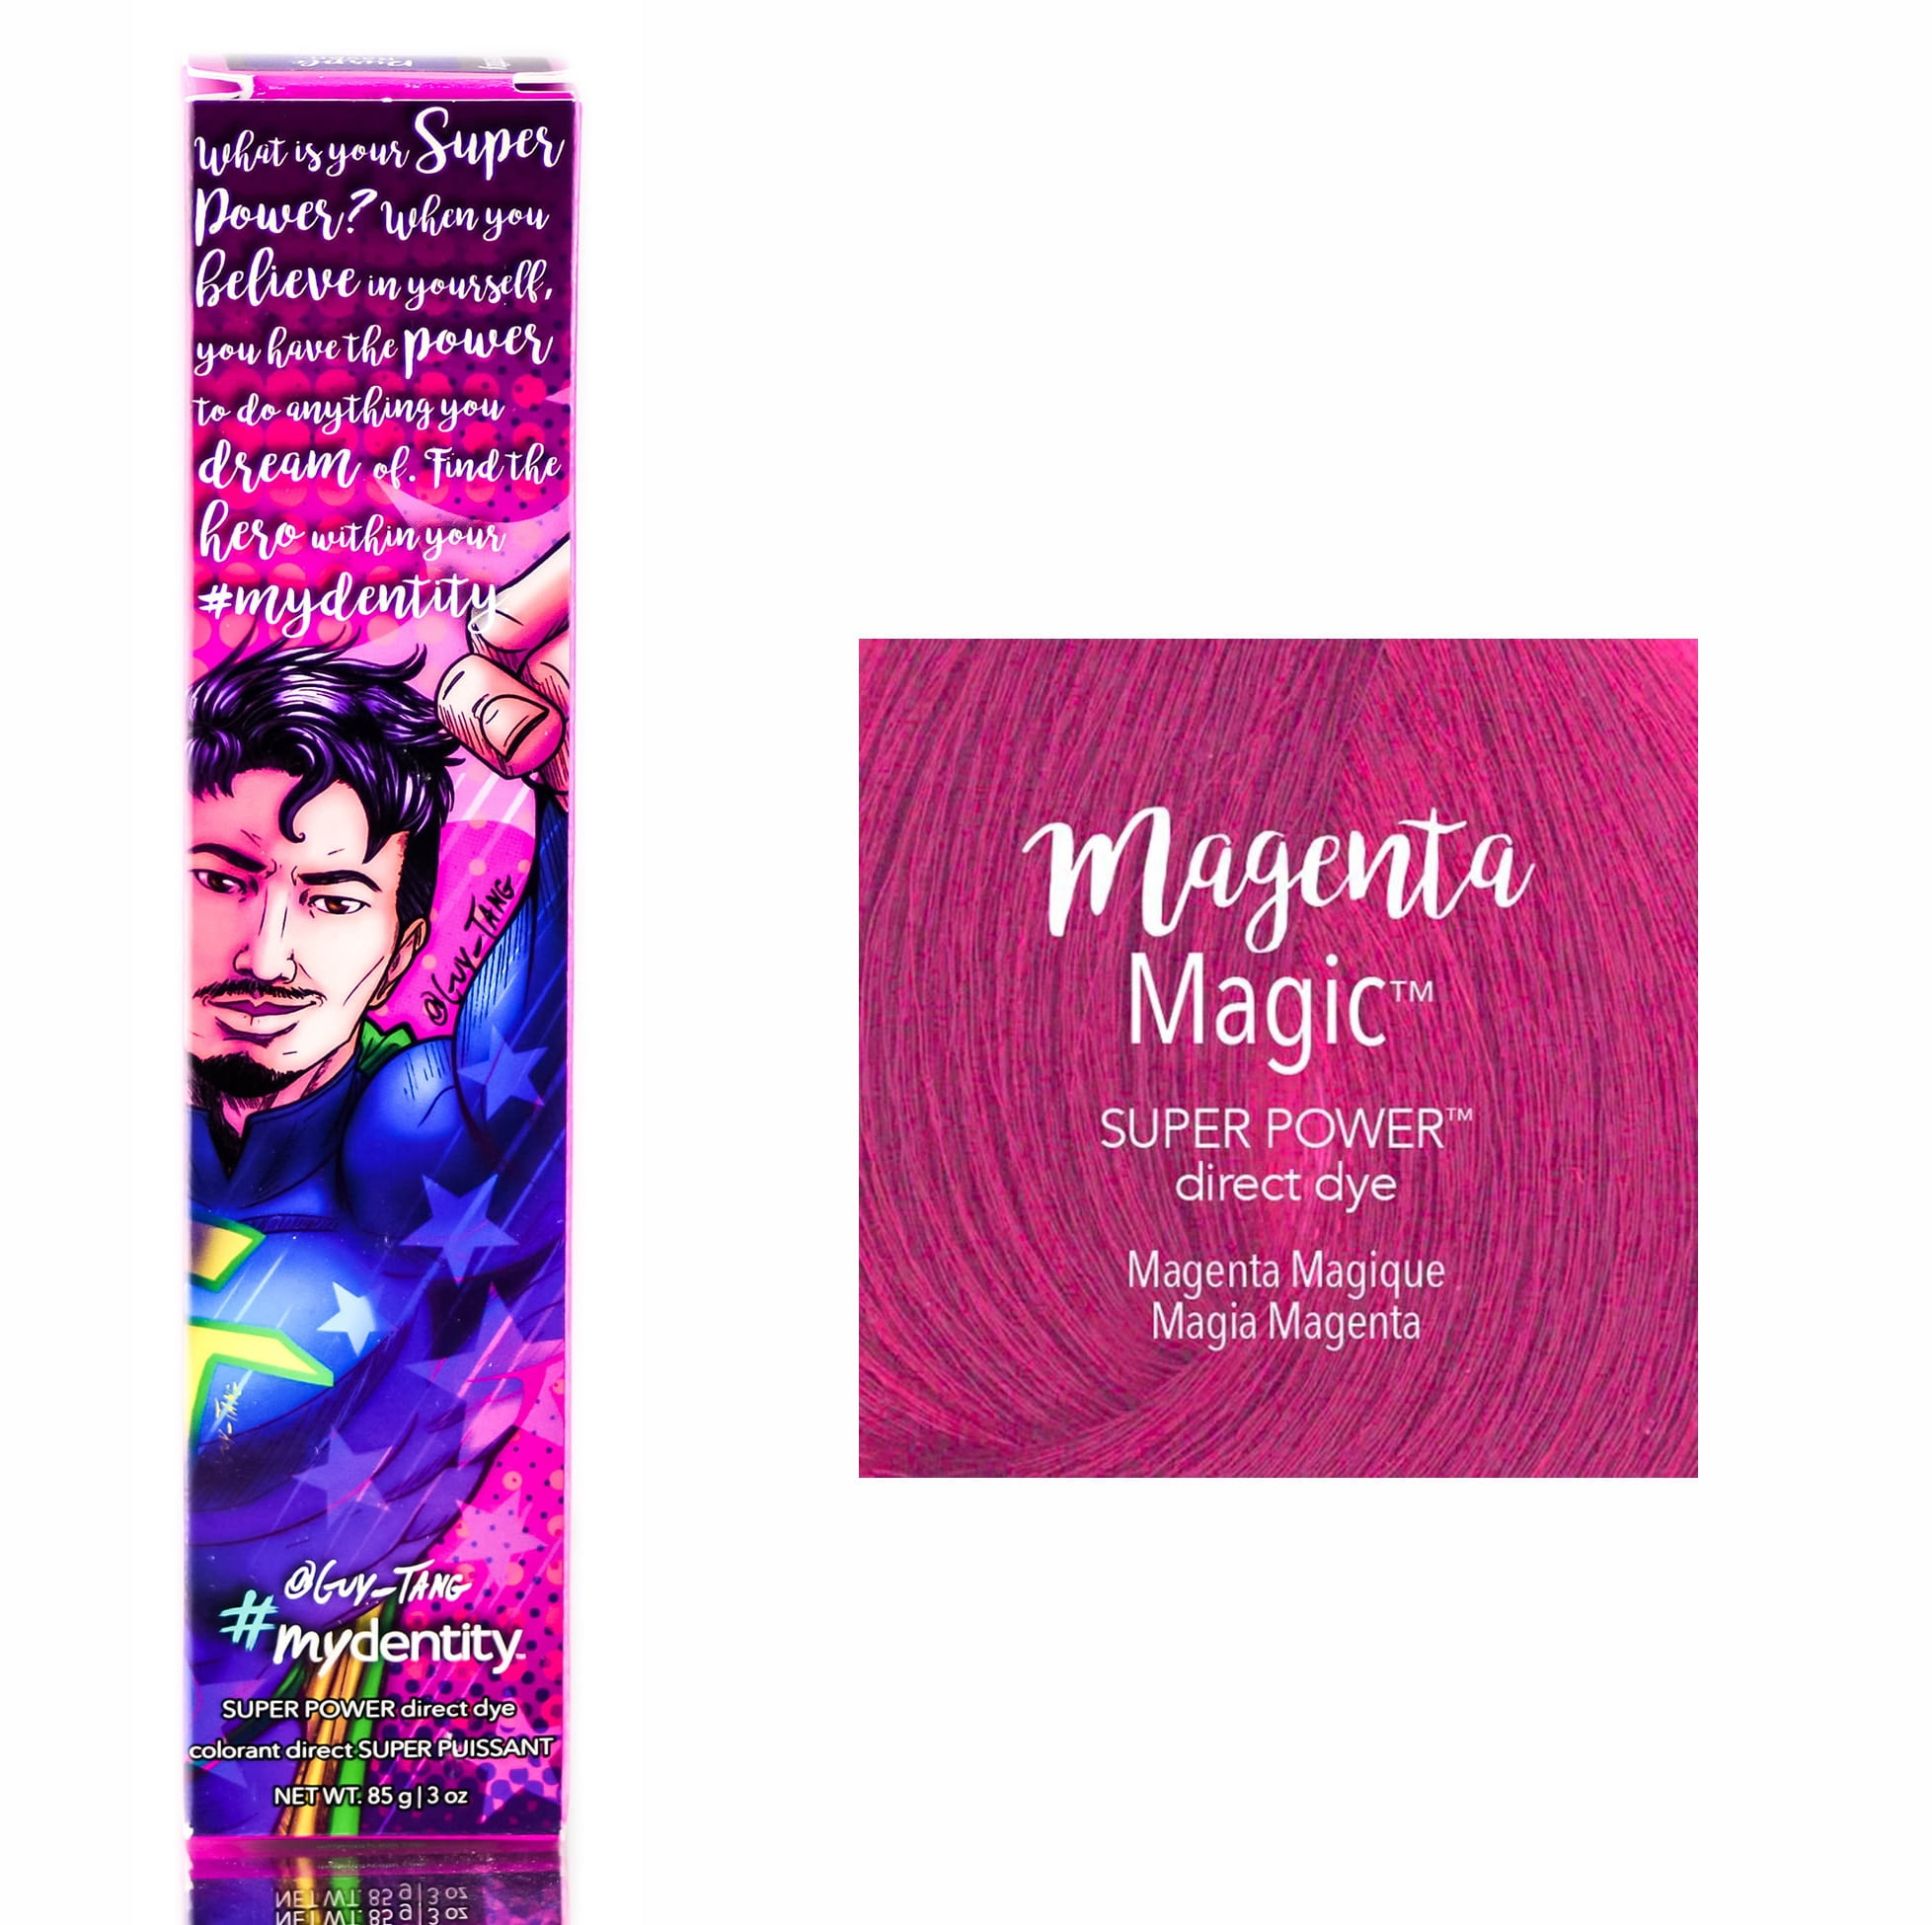 Super Power Direct Dye Magenta Magic - #Mydentity Guy Tang